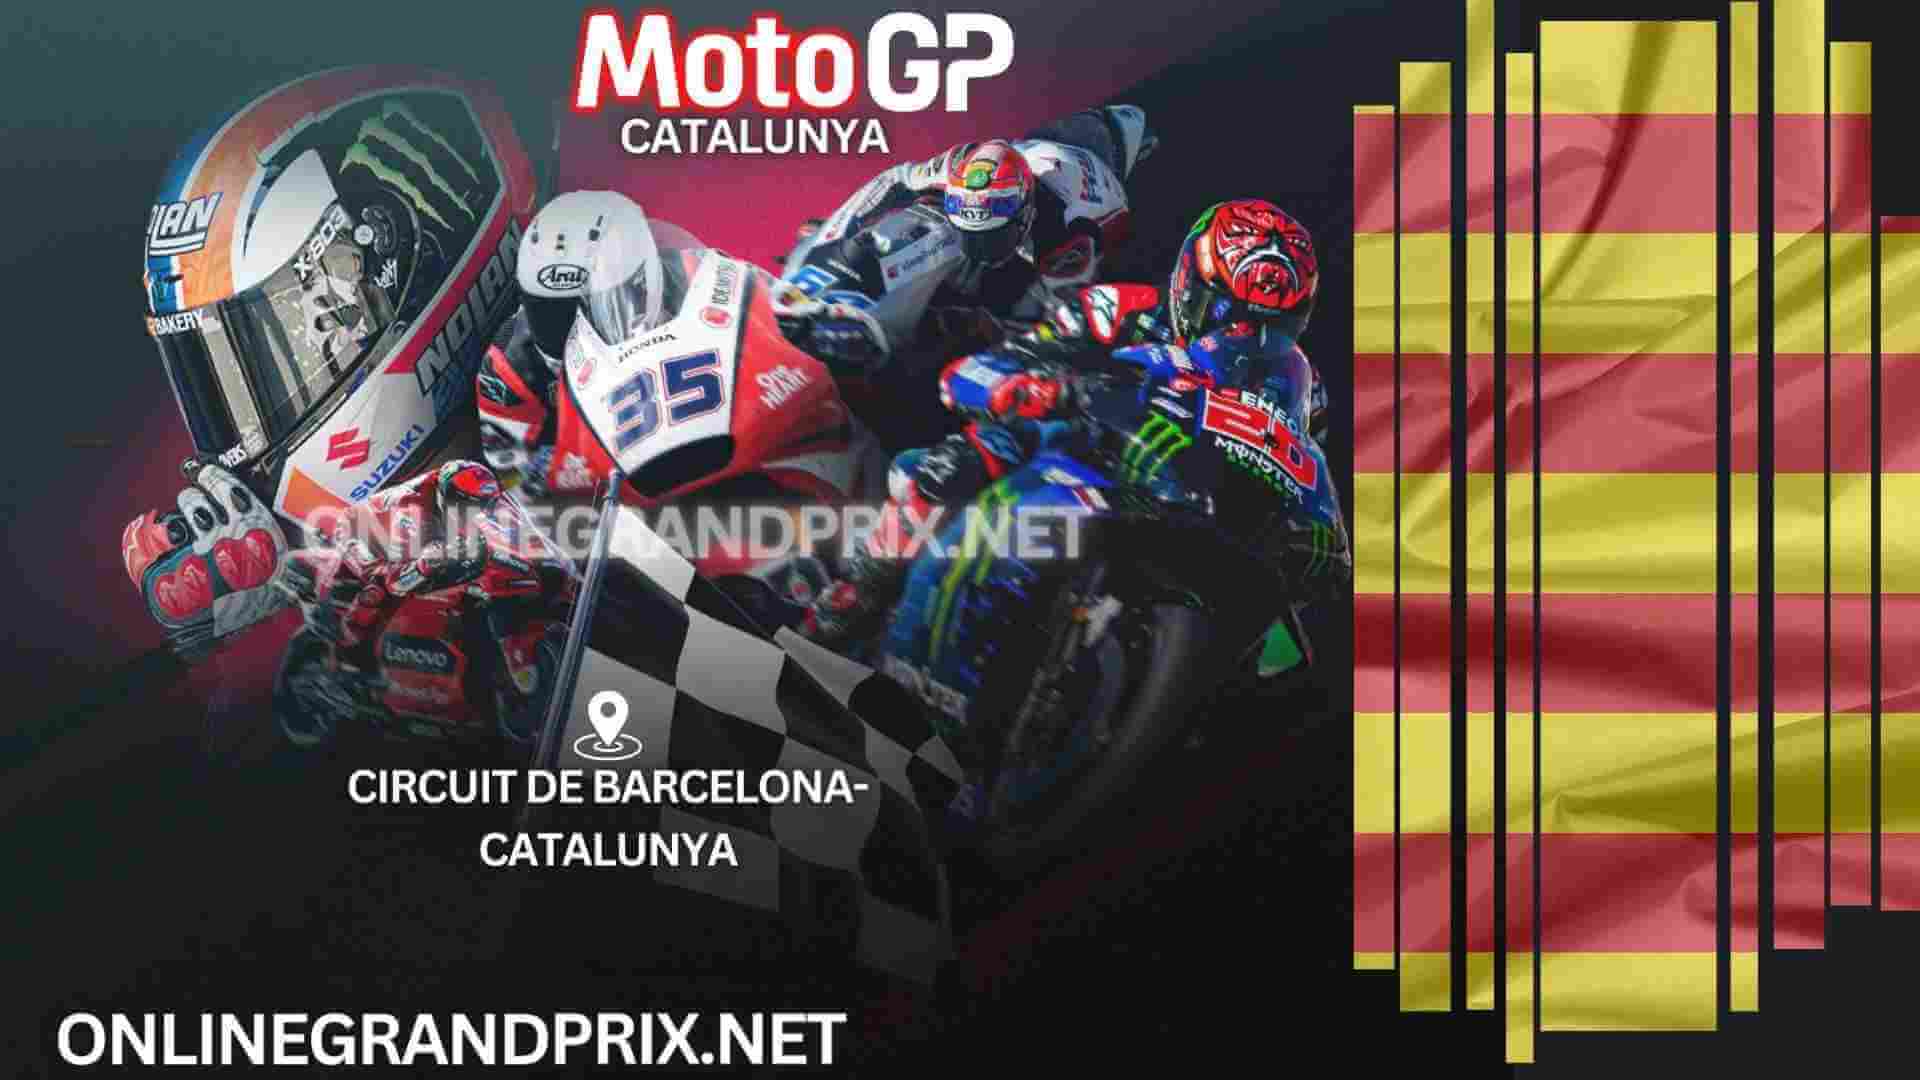 Motogp Catalunya Grand Prix Live Streaming